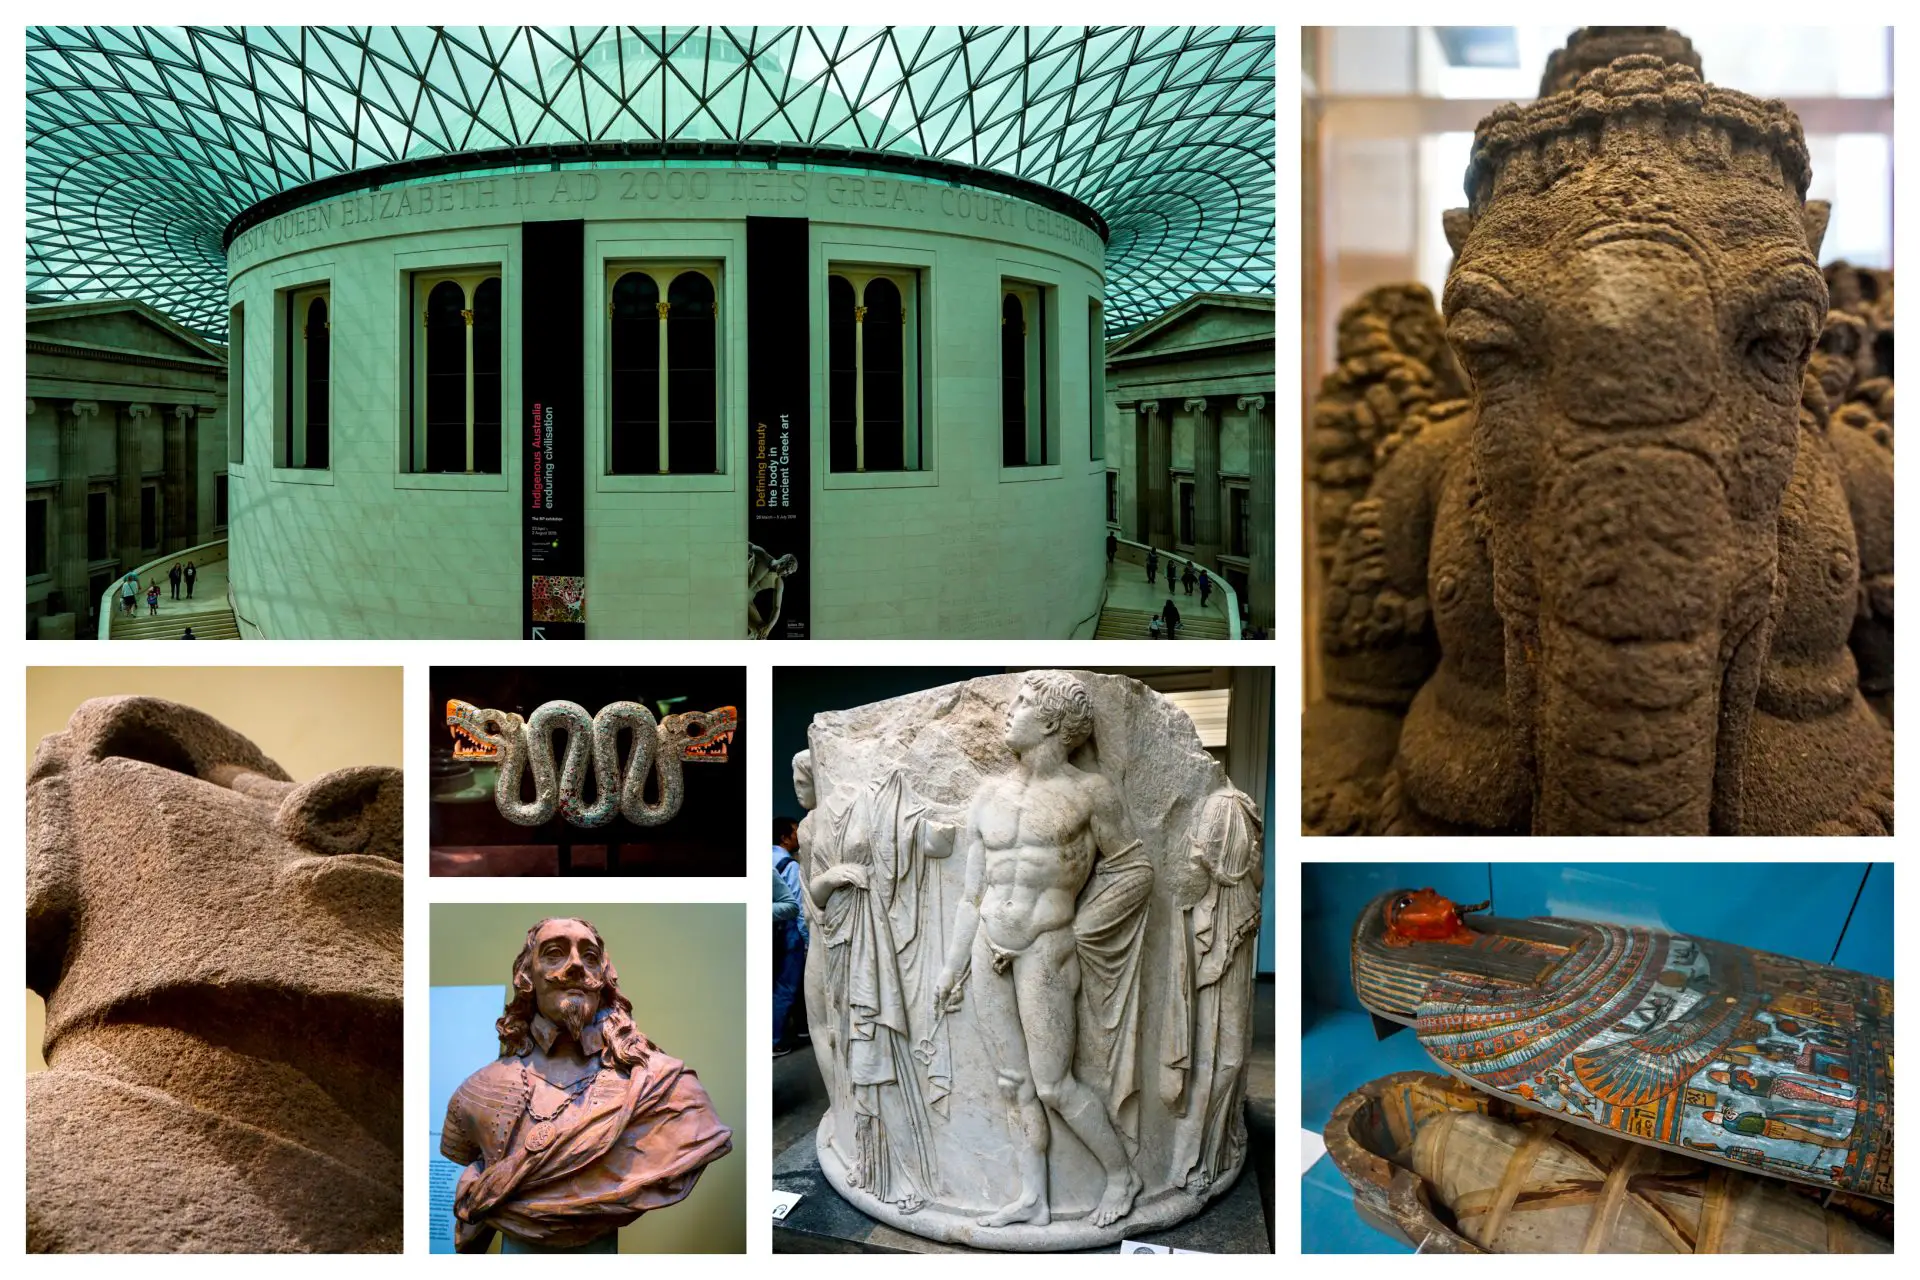 British museum, London - Experiencing the Globe